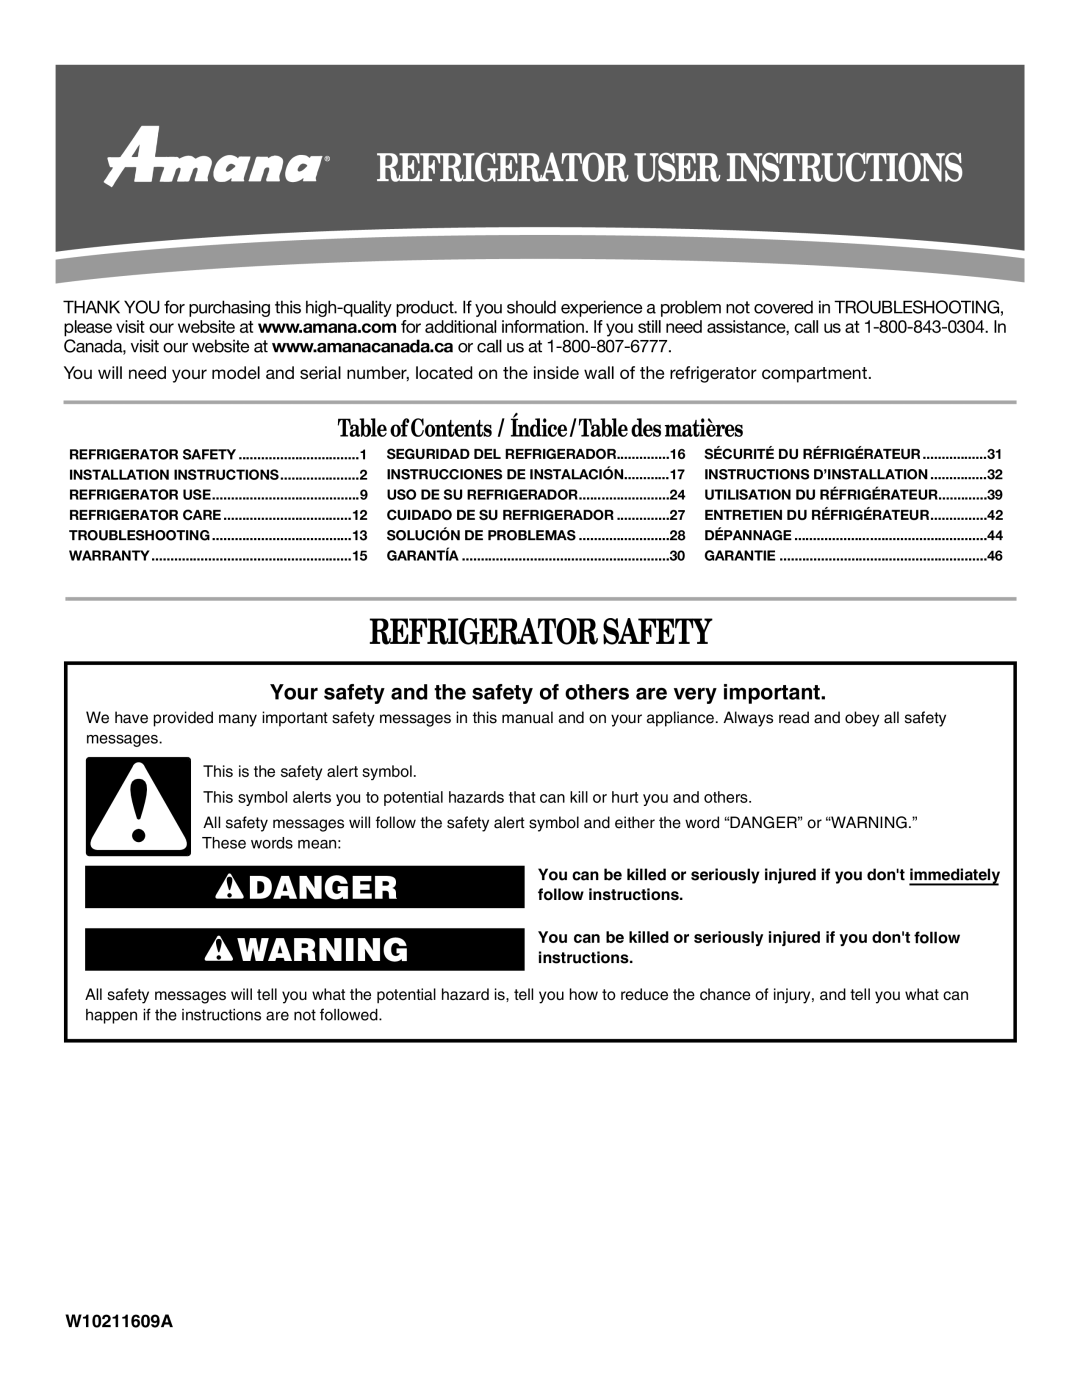 Amana W10211588A, W10211609A installation instructions Refrigerator User Instructions, Refrigerator Safety 